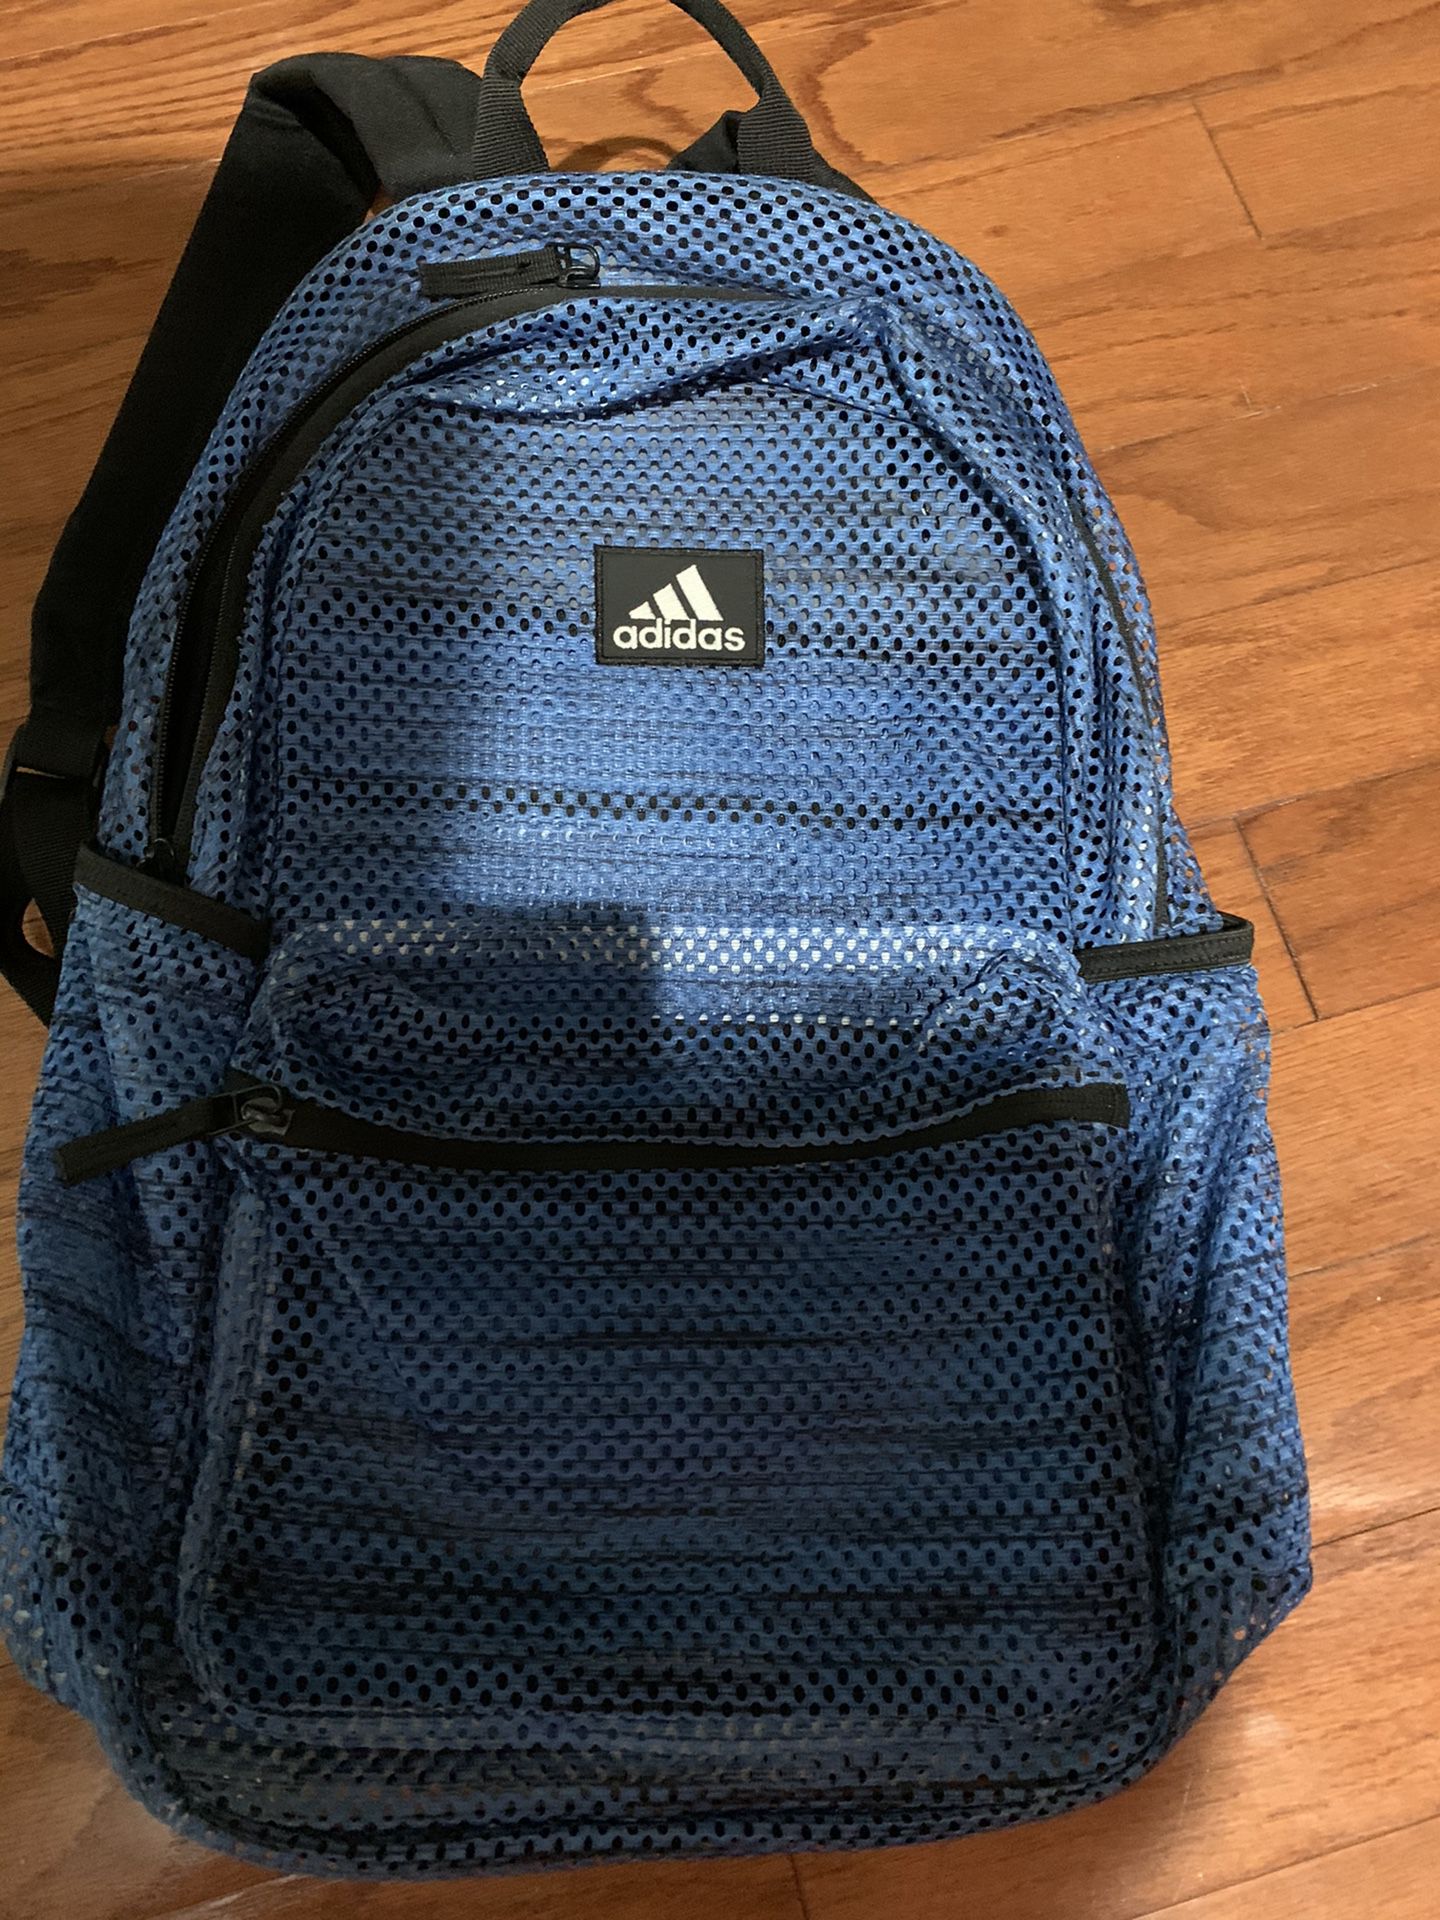 Adidas Mesh Backpack 🎒